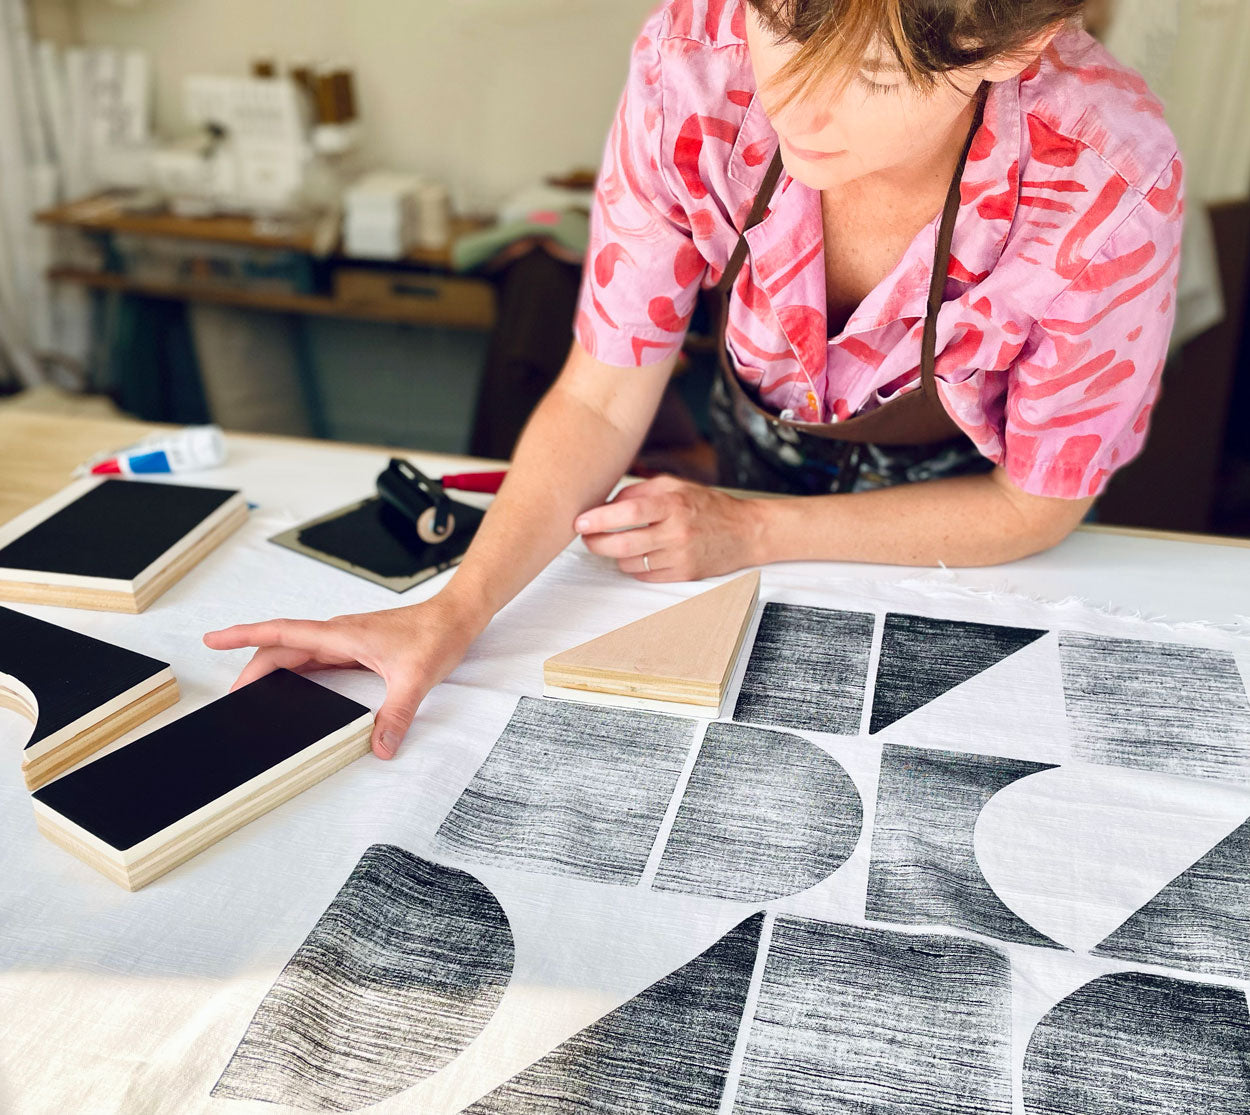 Meg working on a block print fabric design.